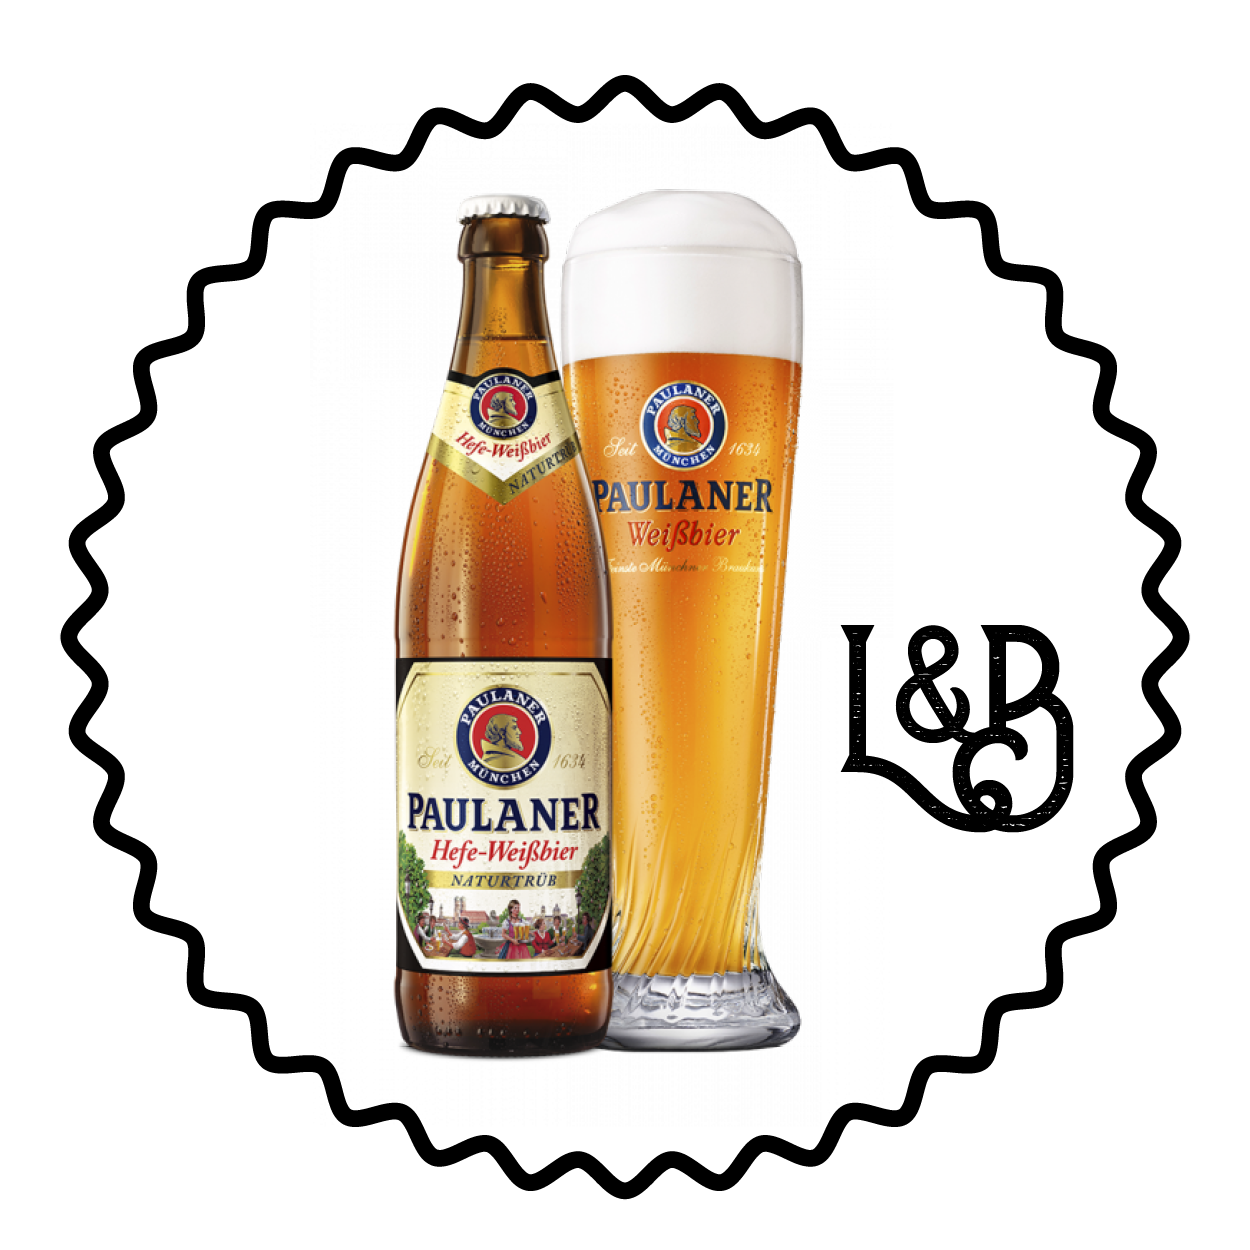 7877162162_79_paulaner-weissbier-pression-meilleure-biere-laser-beers.png